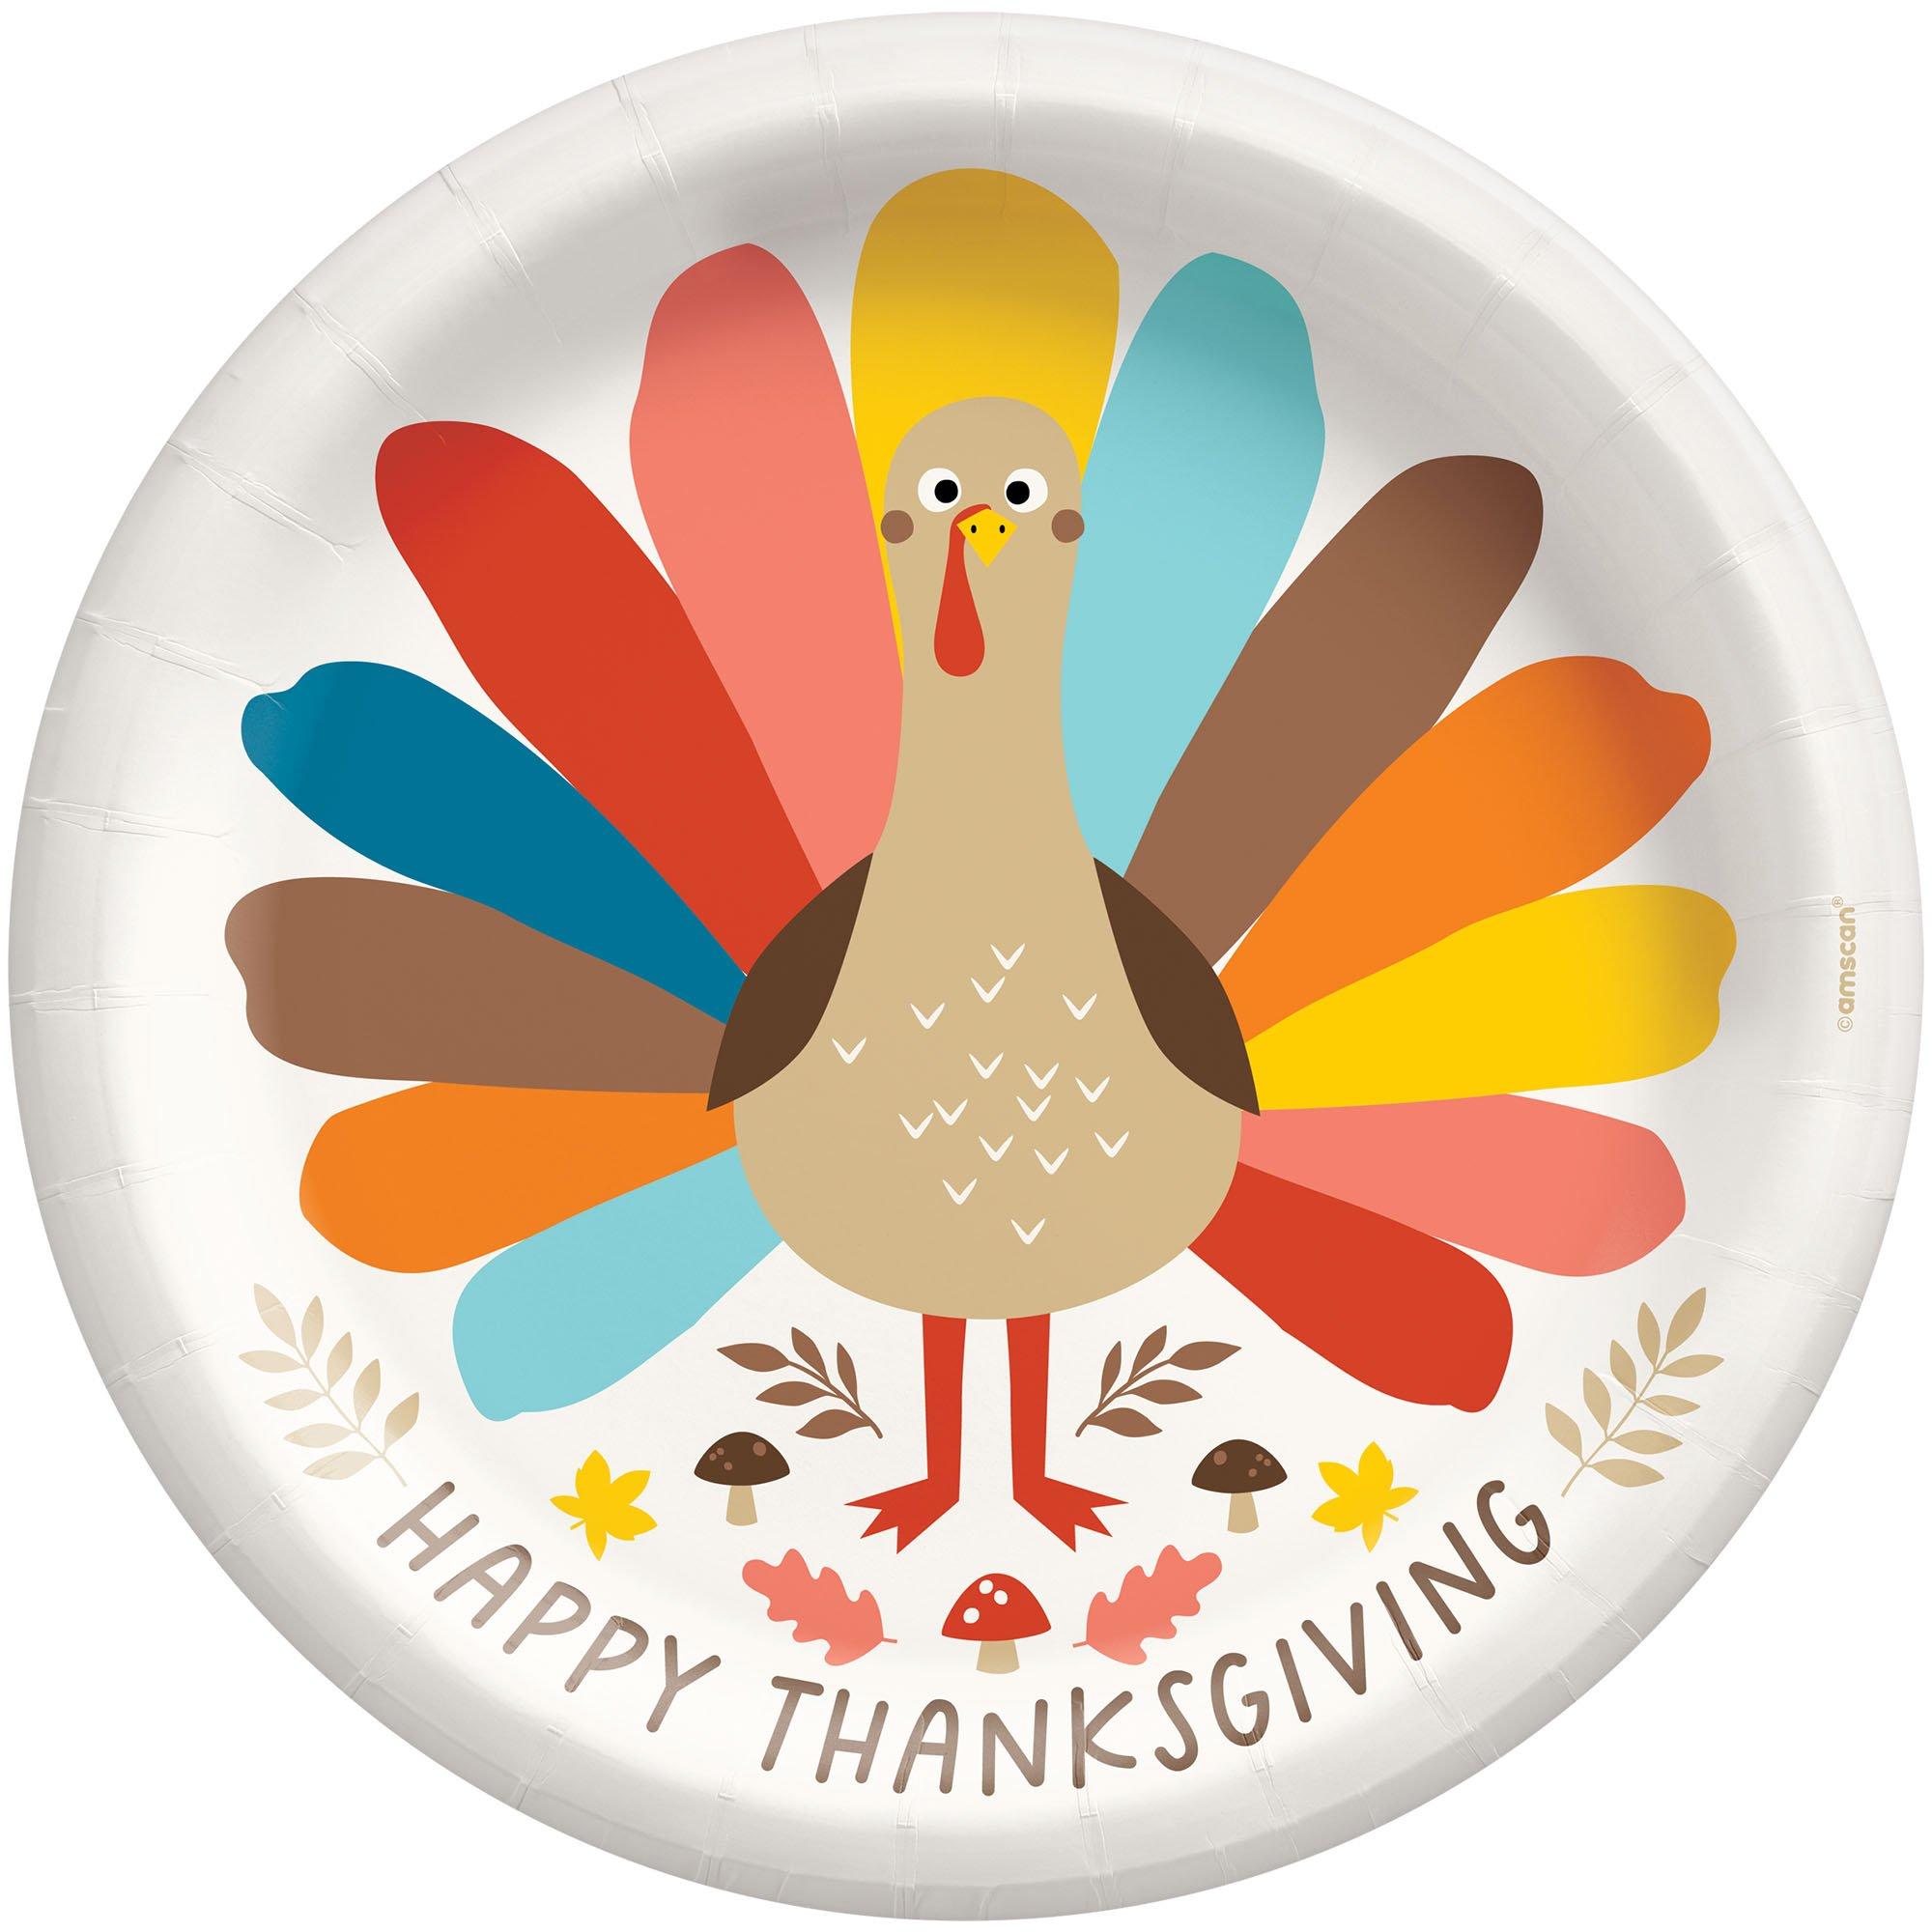 cartoon thanksgiving turkey